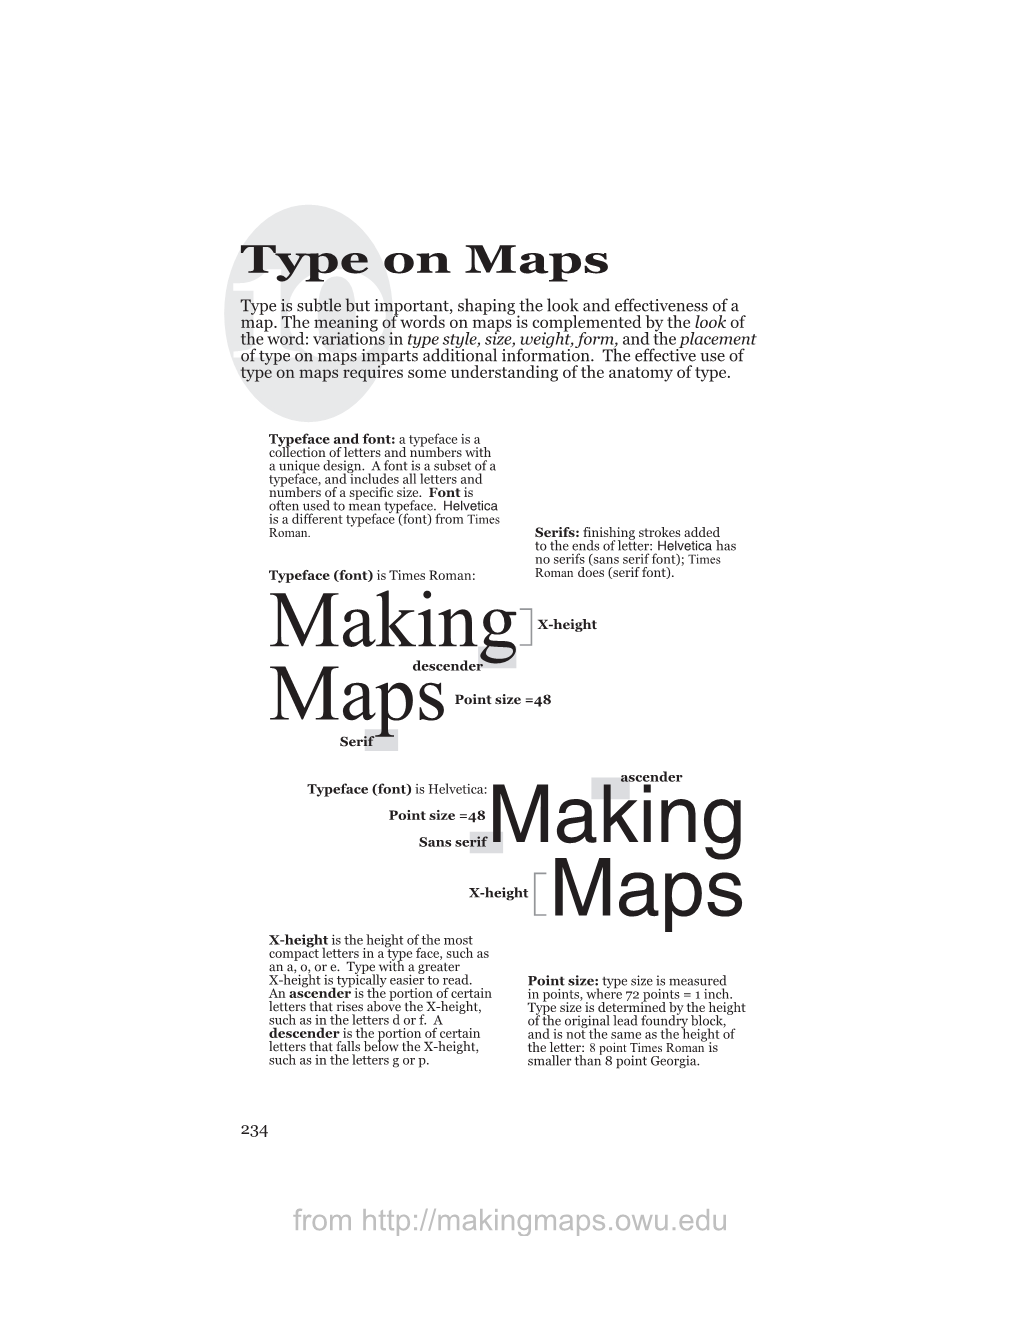 Type on Maps